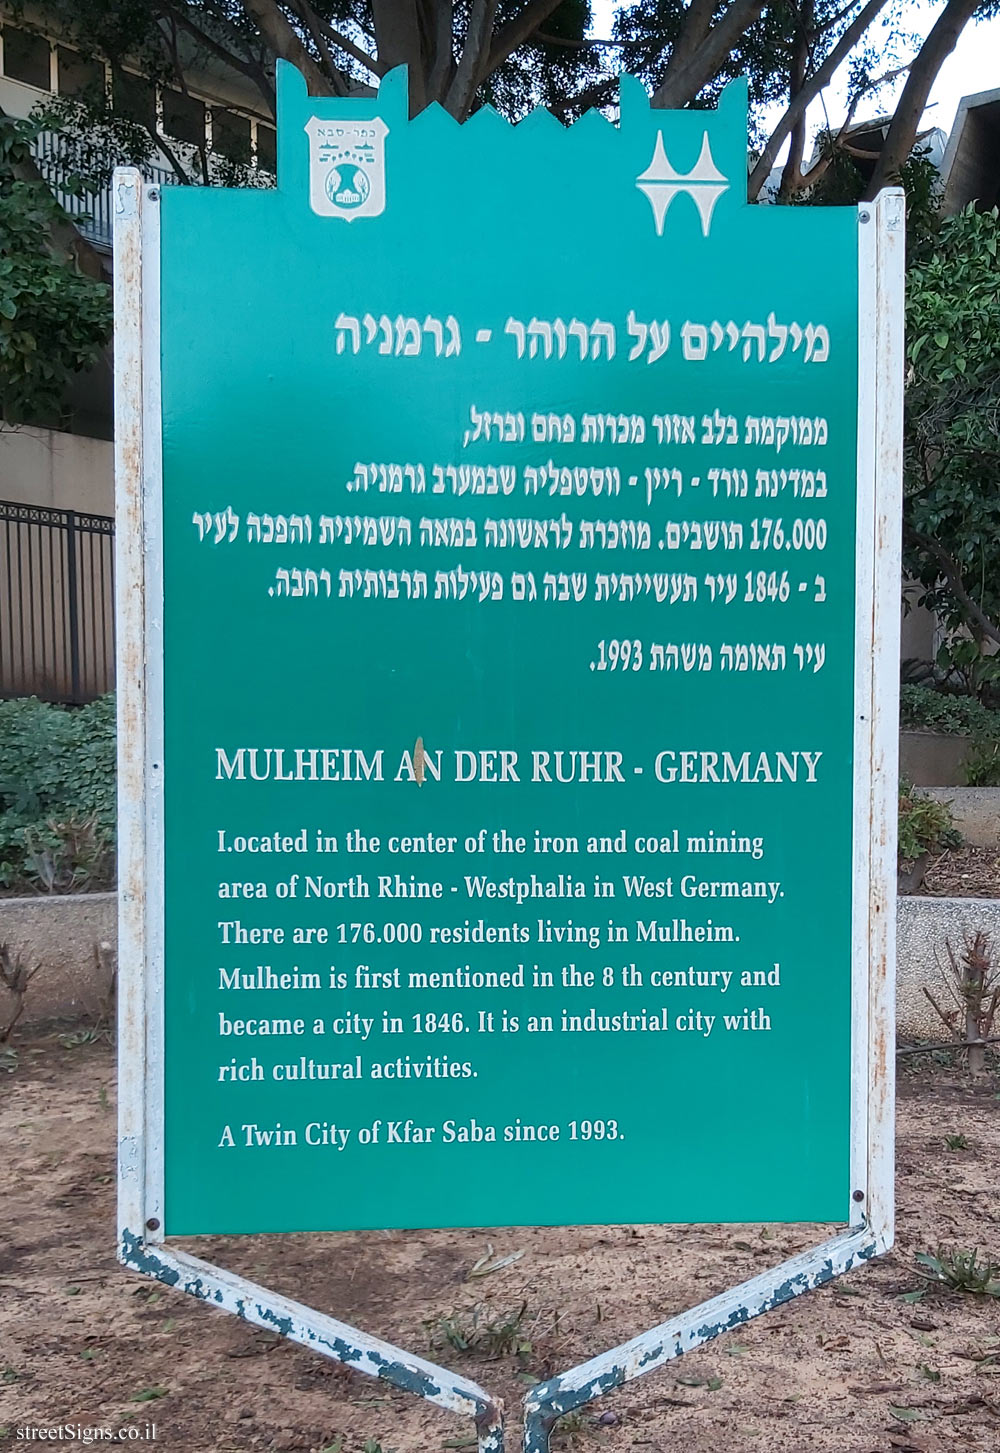 Kfar Saba - Twin City Square - MULHEIM AN DER RUHR - GERMANY